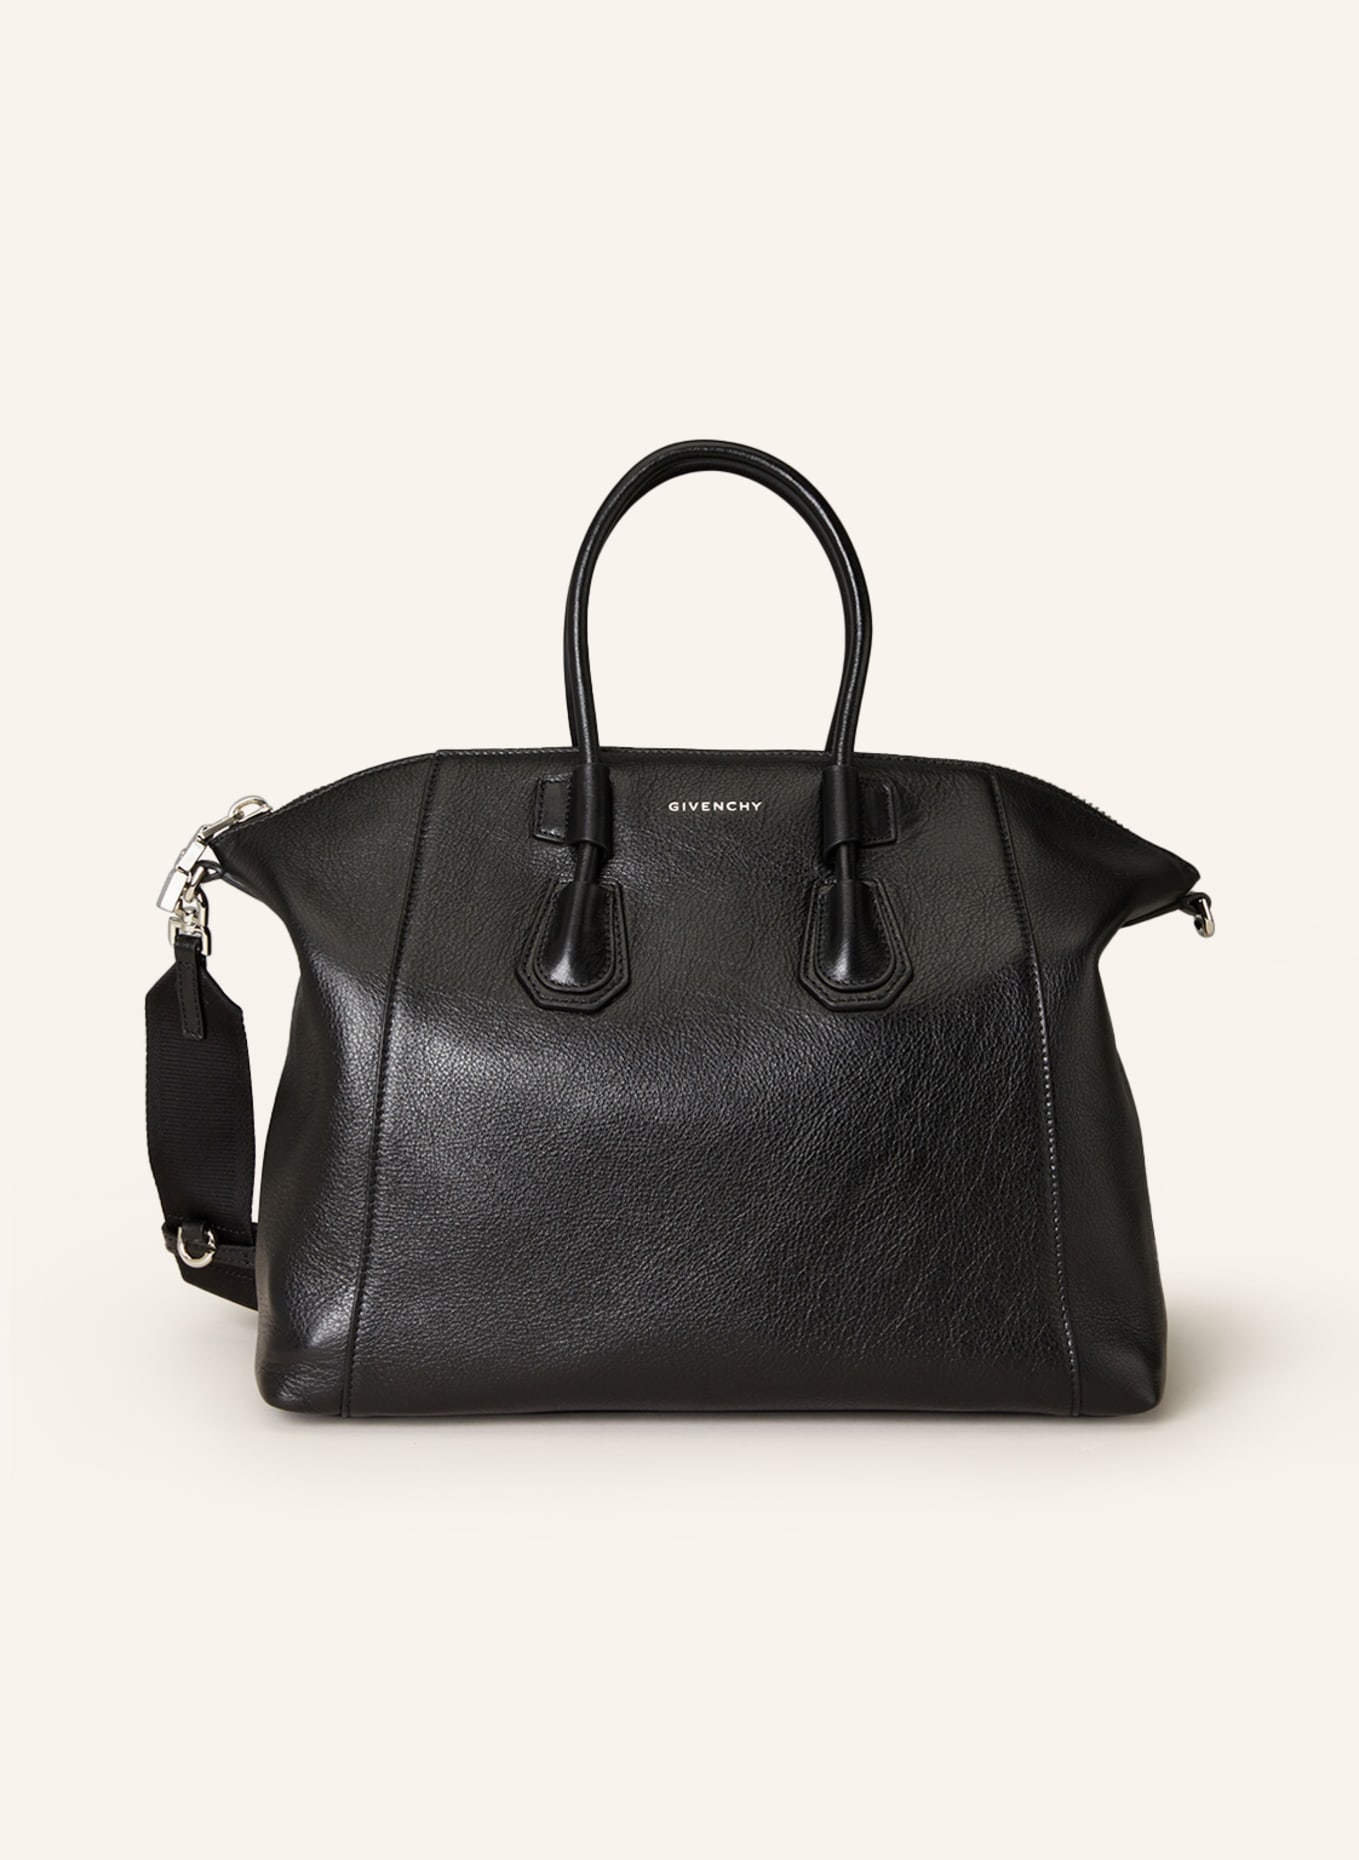 BRAND NEW - Medium Antigona black box smooth leather Givenchy bag + duster  bag | eBay